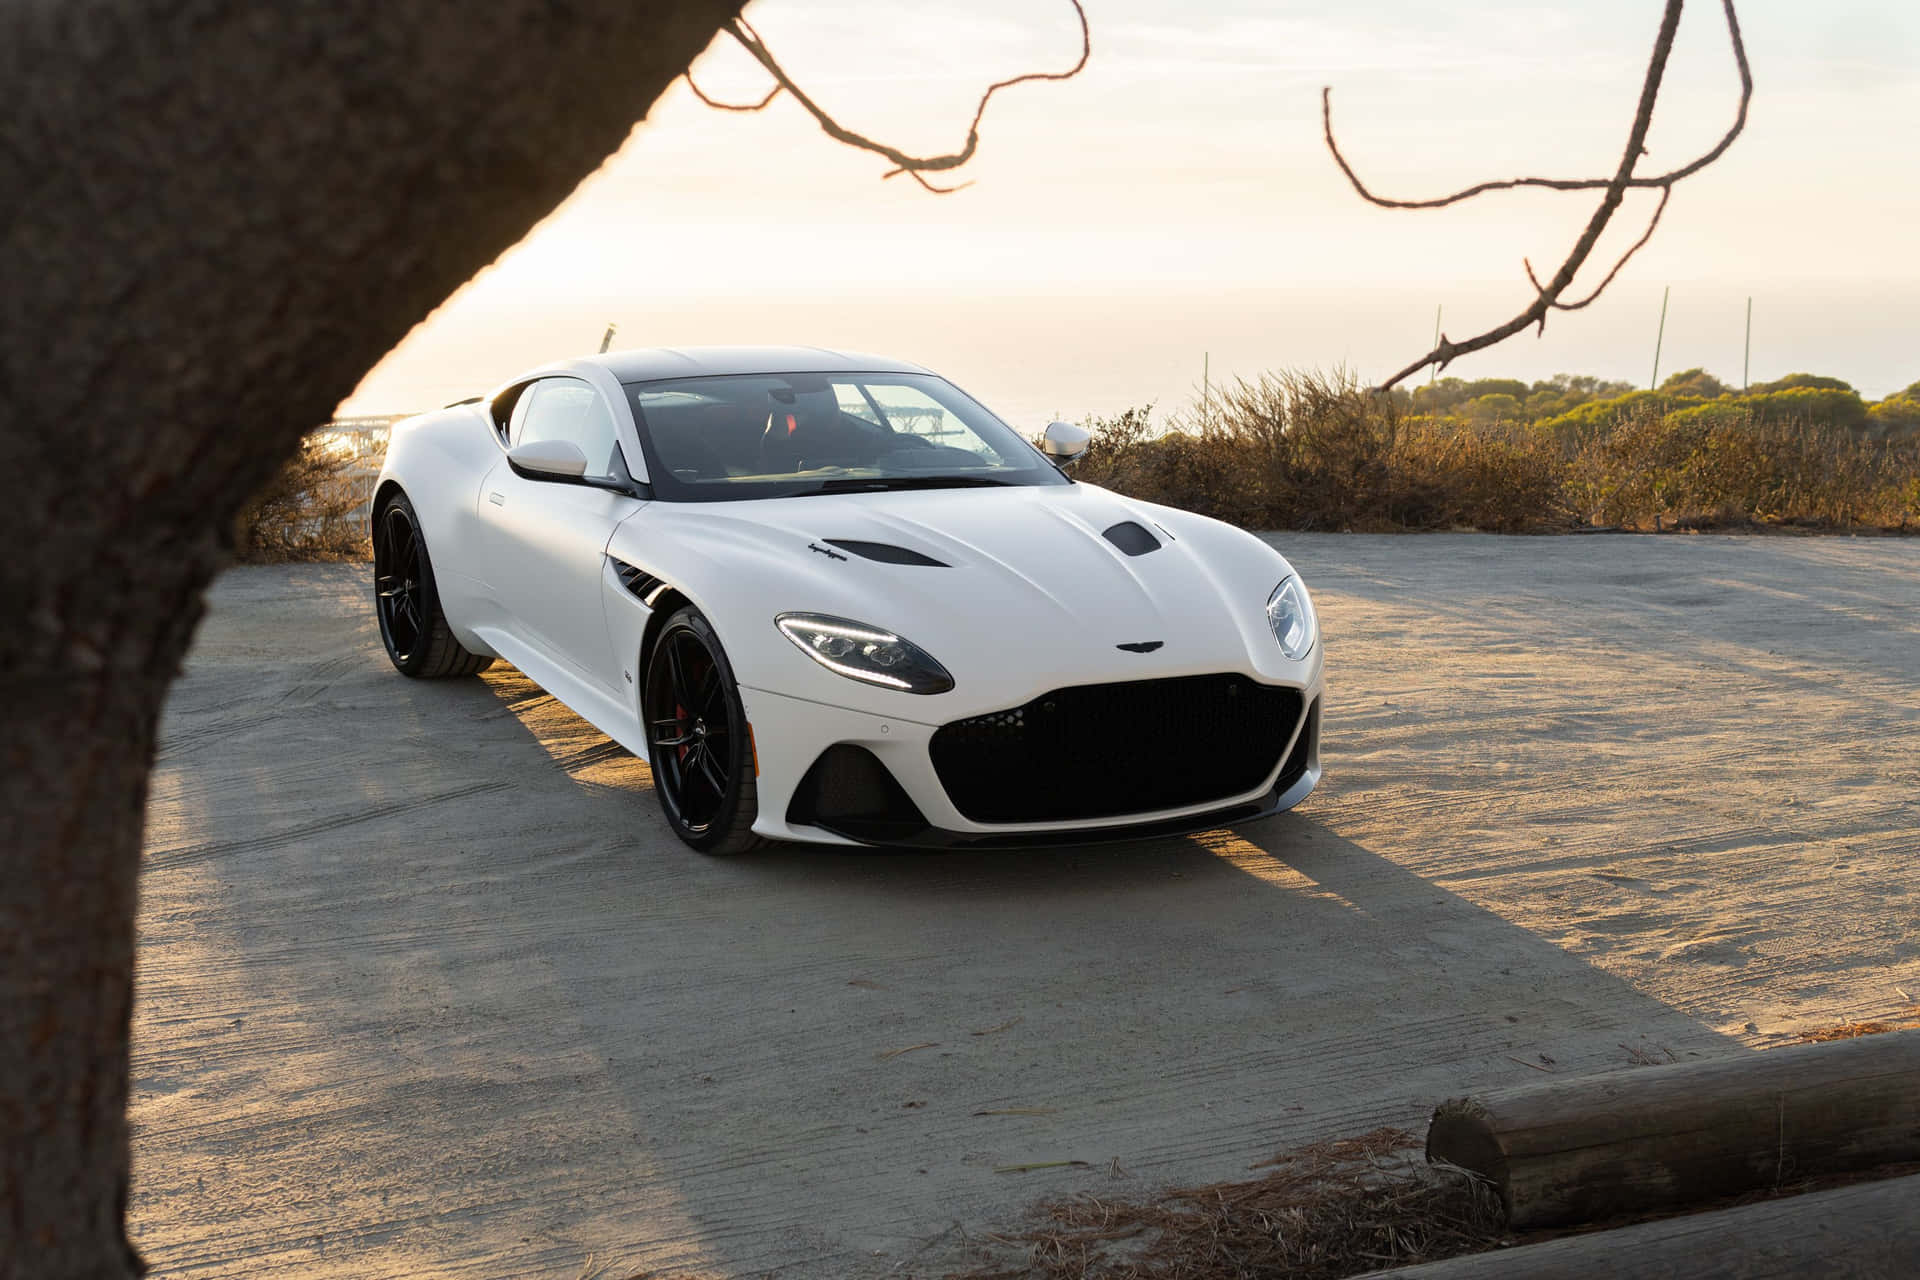 "Experience Luxury&Refinement in an Aston Martin"